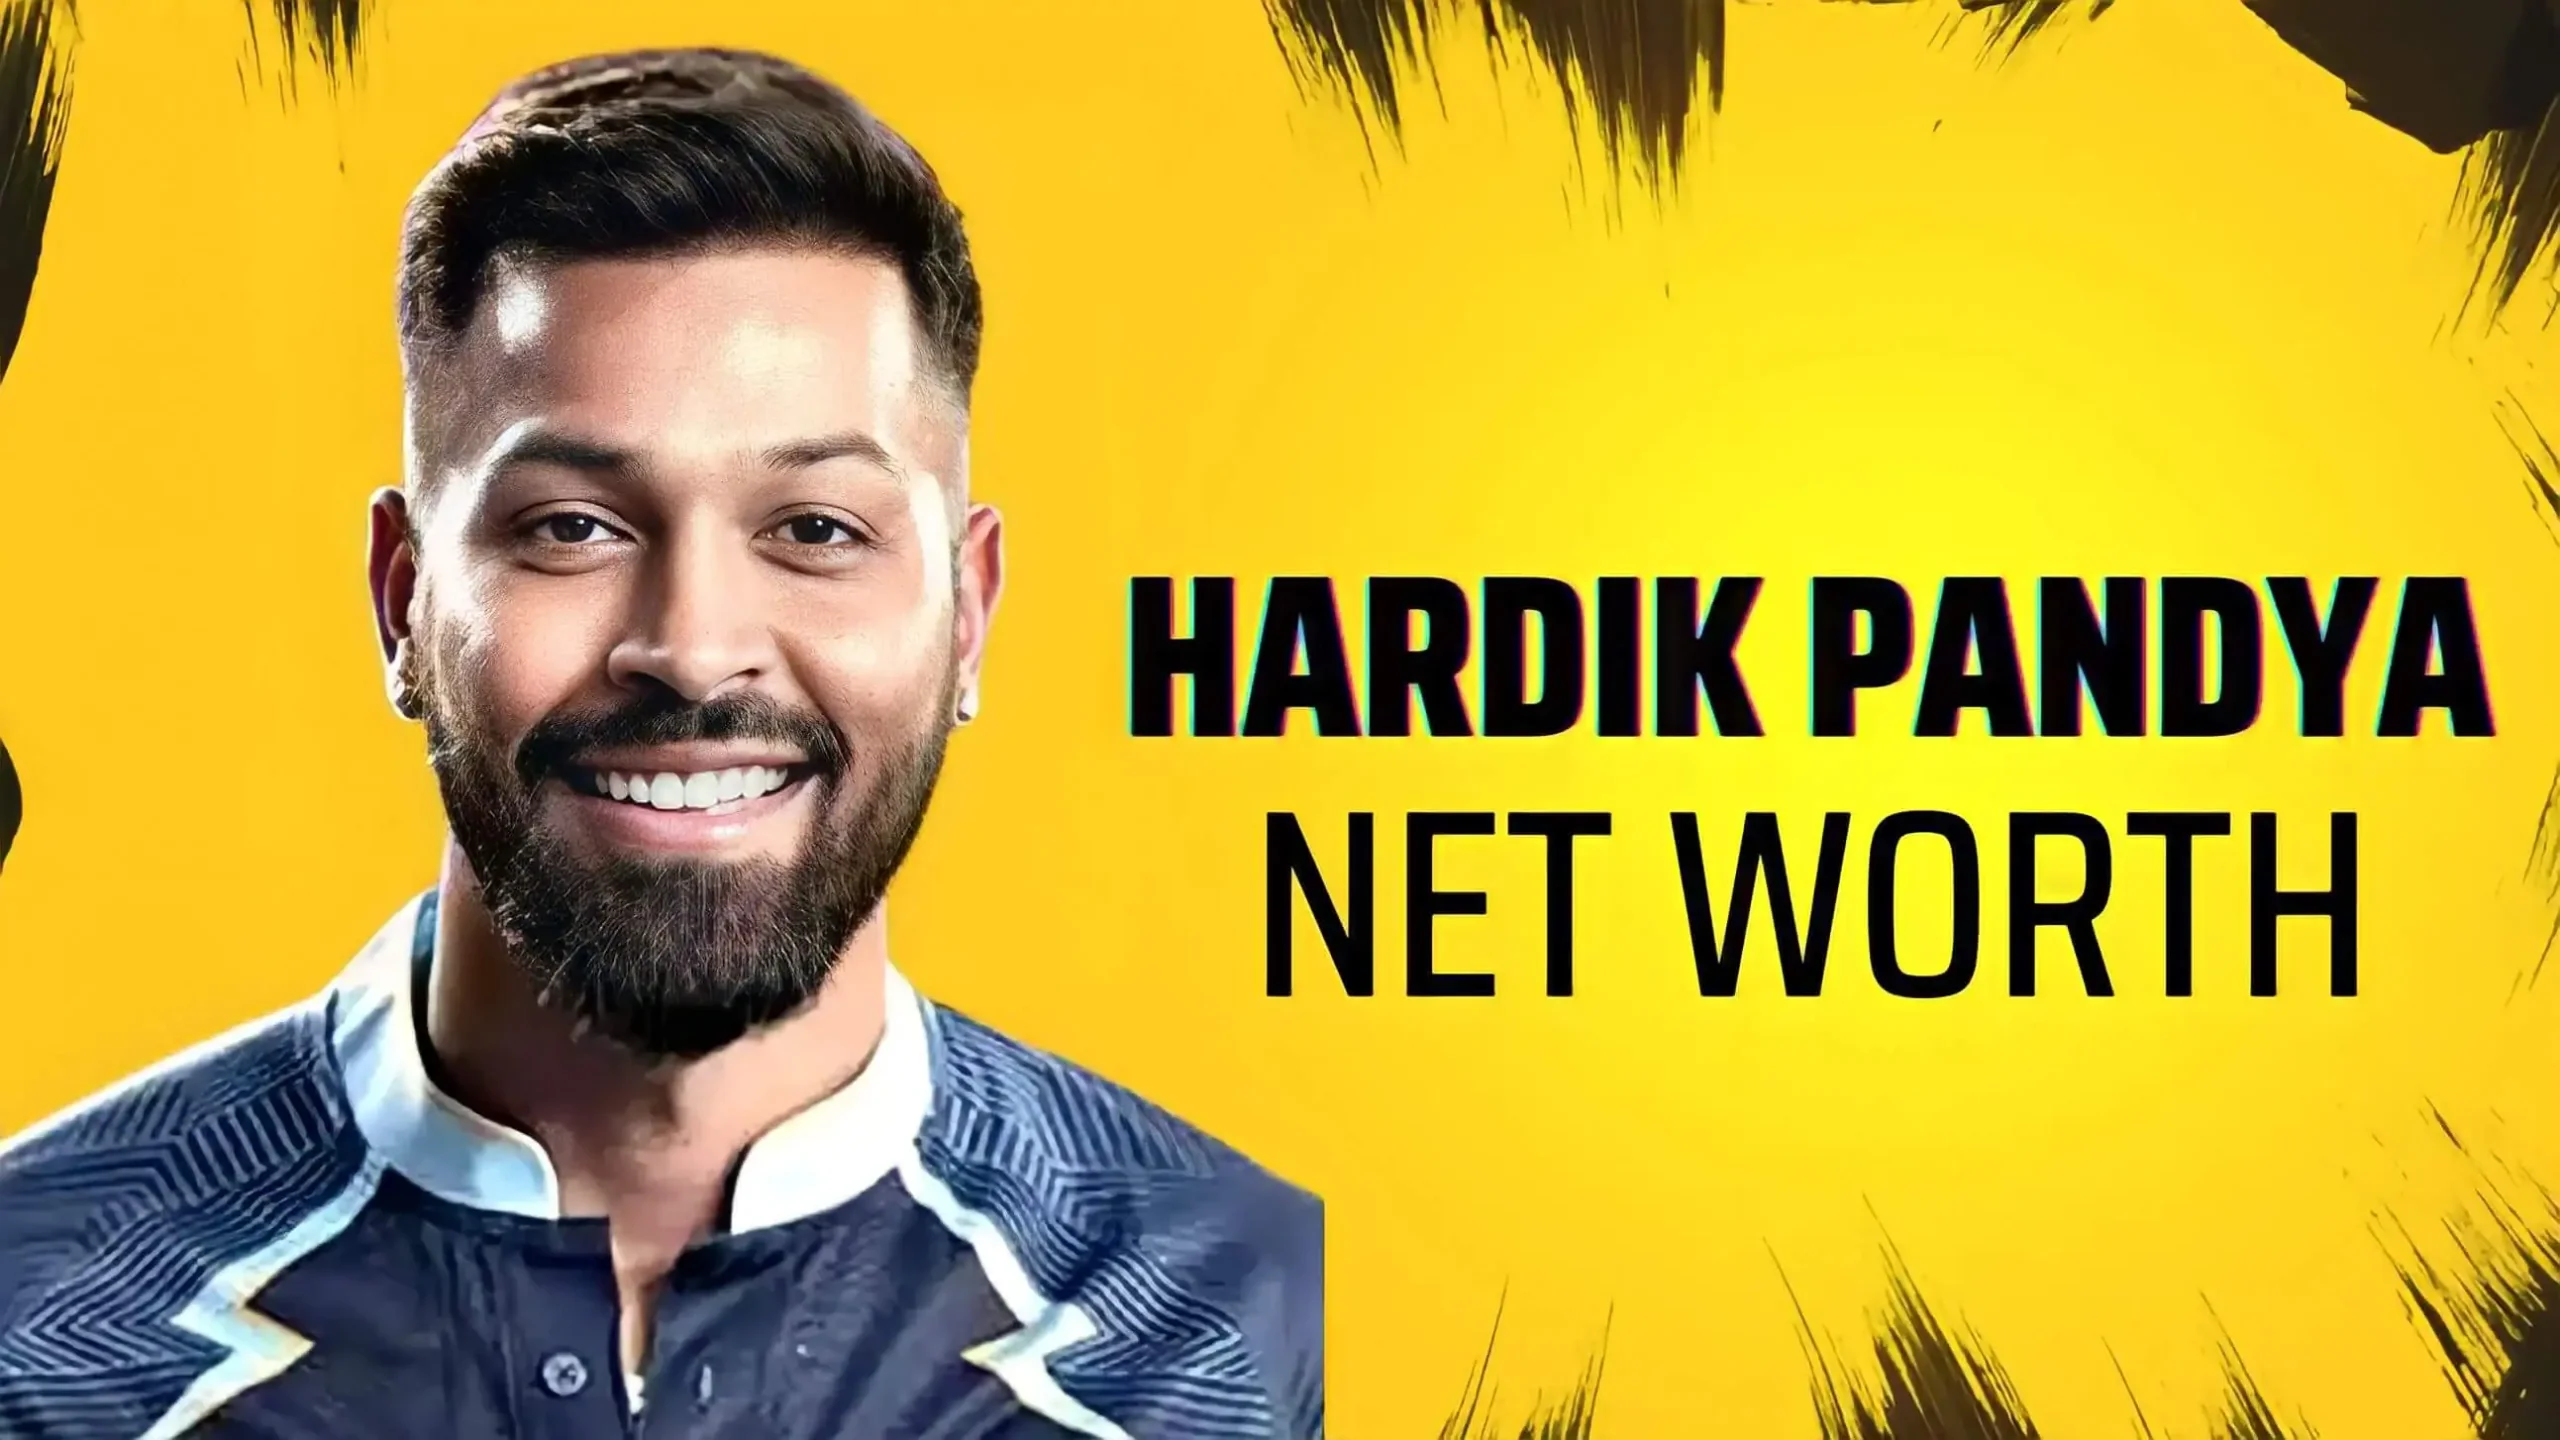 Hardik pandya tattoos meaning story behind tattoos cricket mania   YouTube